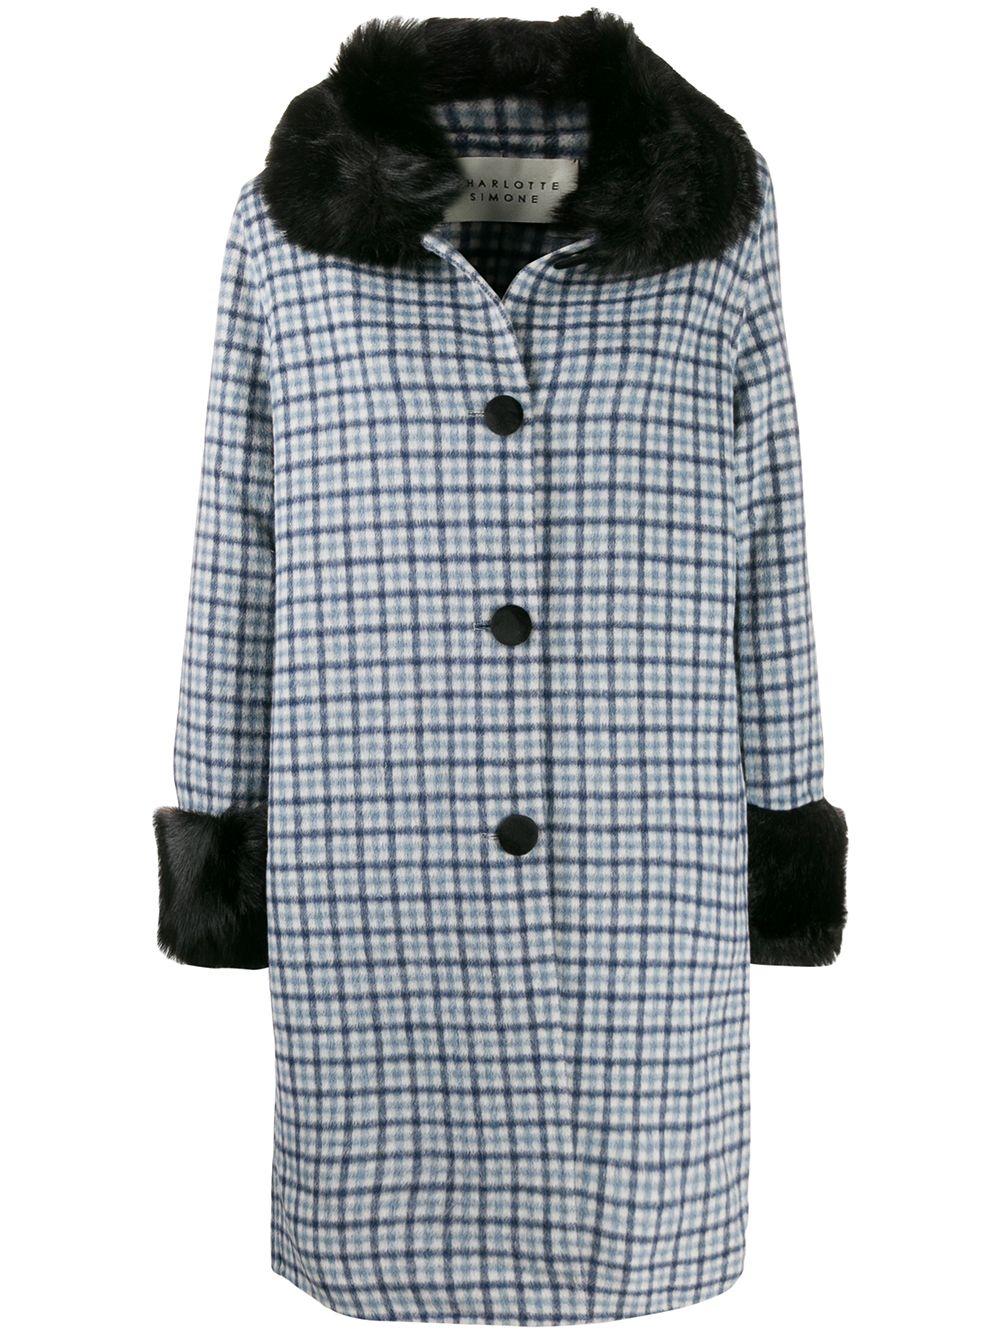 Charlotte Simone Wool Faux Fur Trim Check Coat in Blue - Lyst